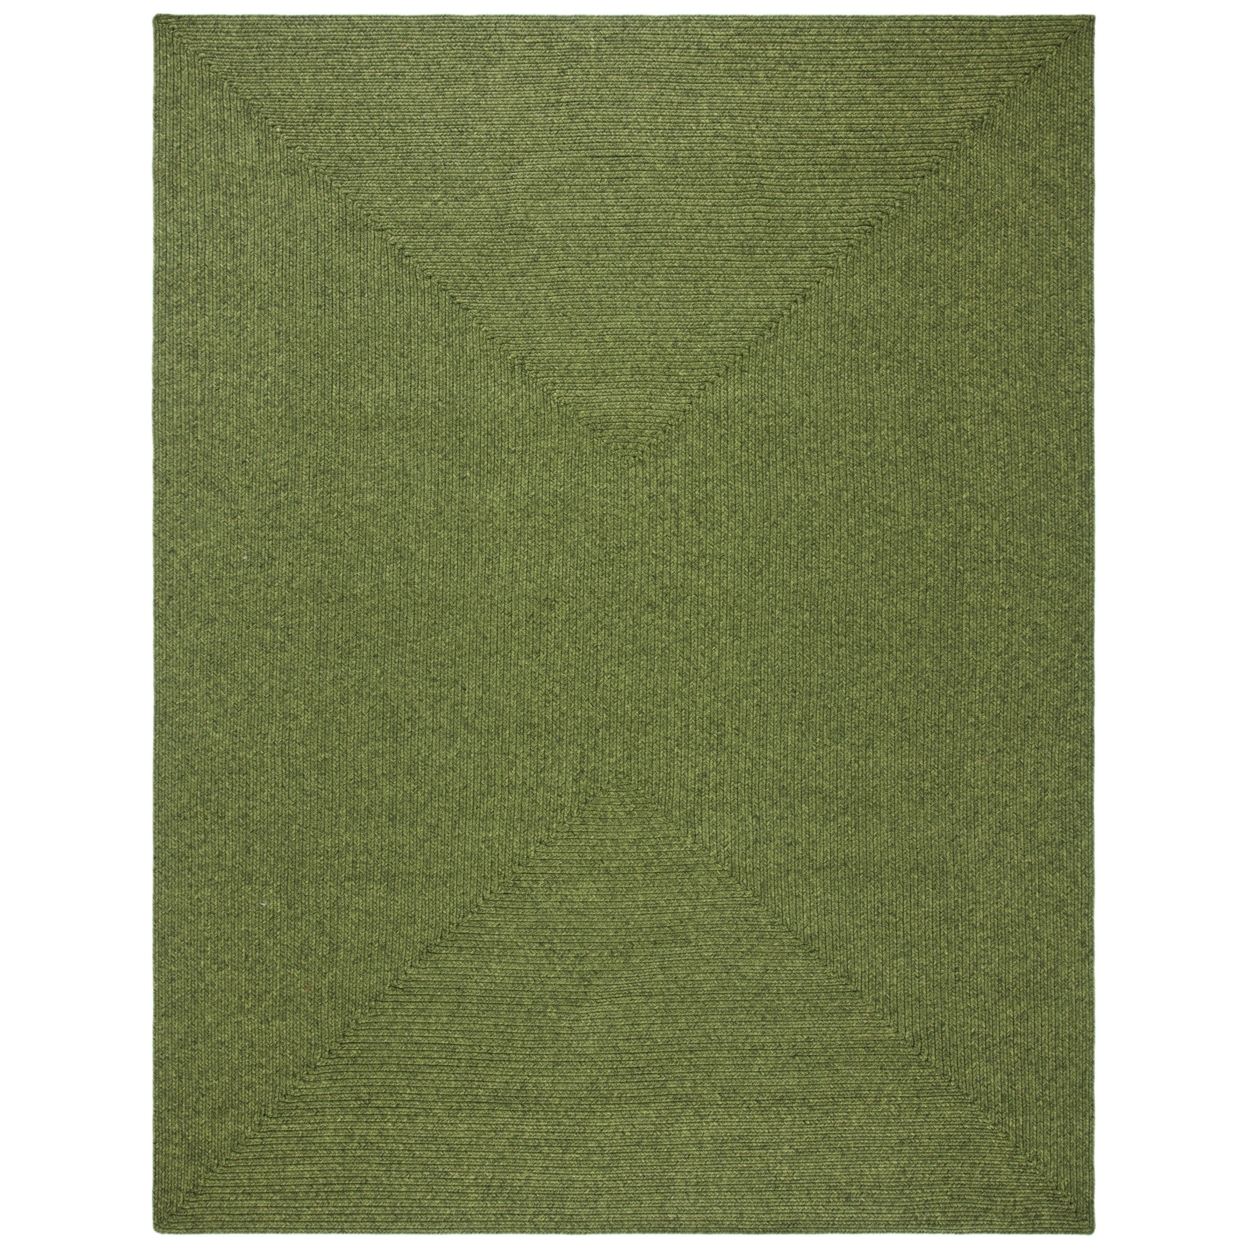 SAFAVIEH Braided Rishika Solid Area Rug, Green, 5' x 8' Oval - image 2 of 10